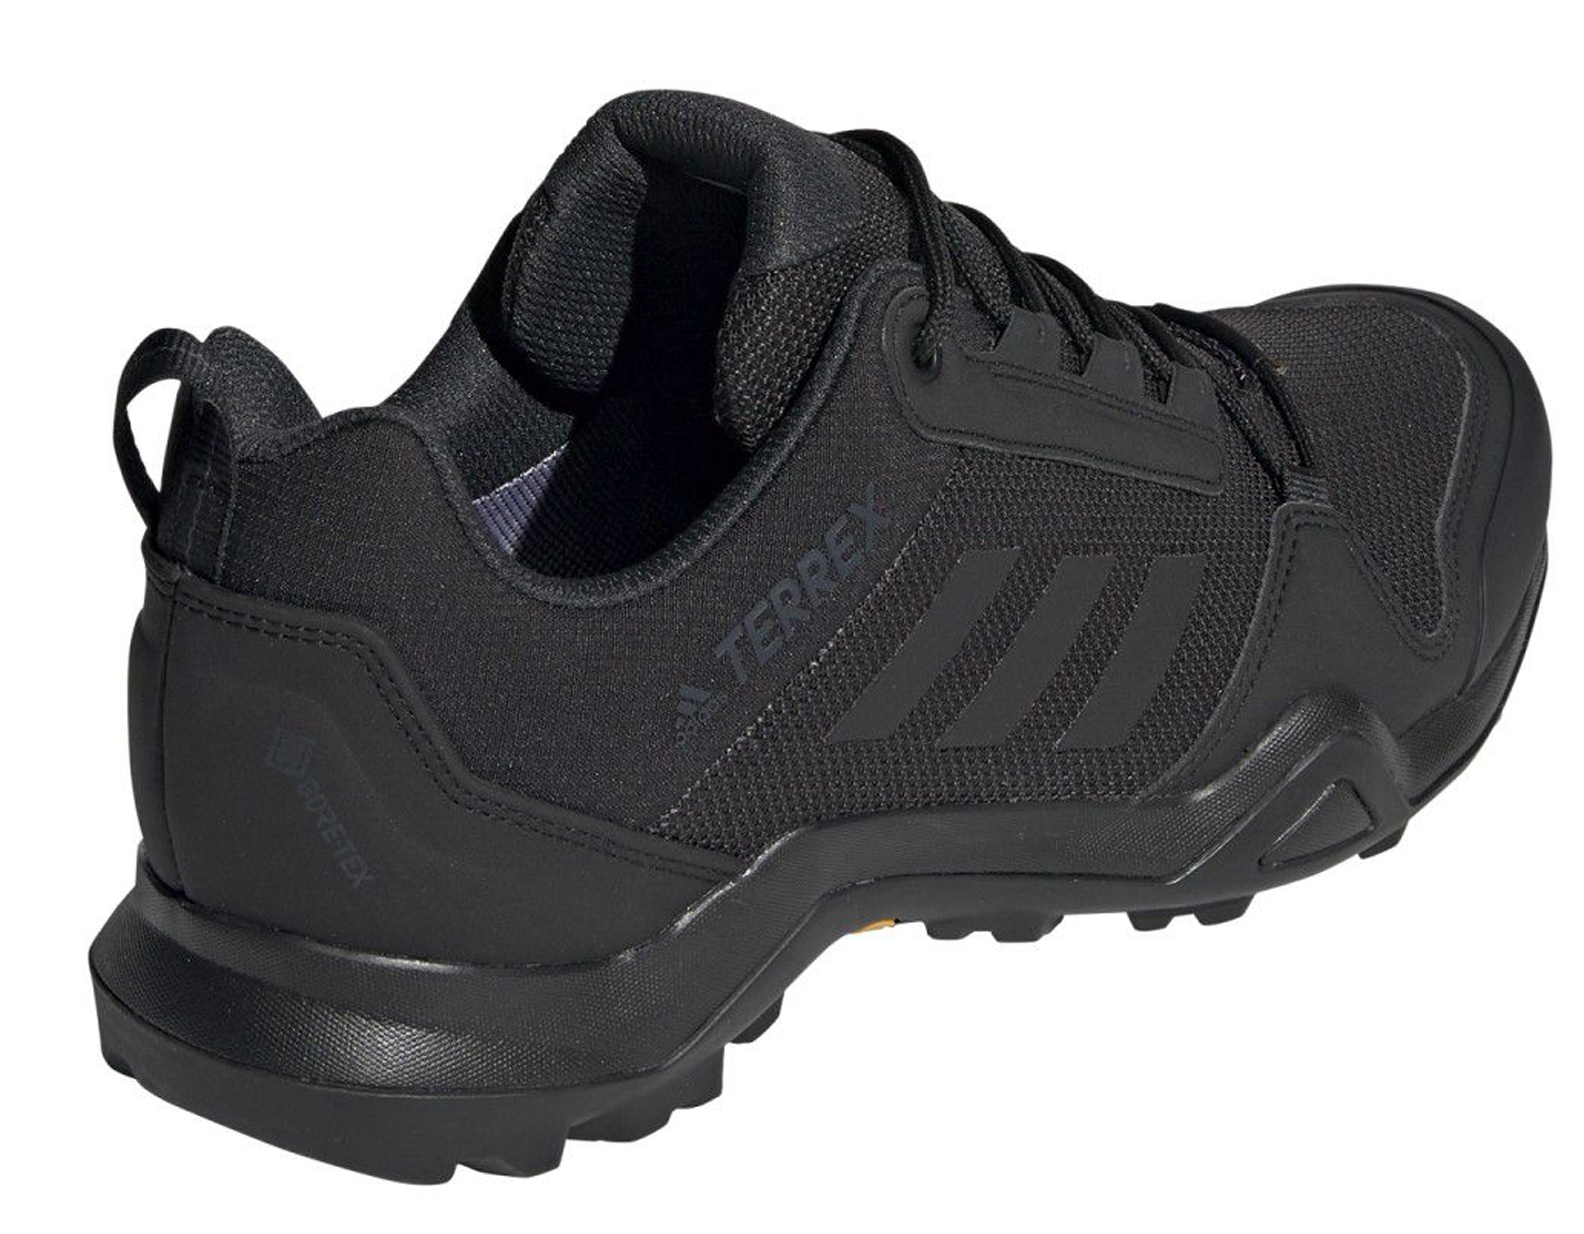 Zapatillas Adidas Terrex GTX Negro - Peregrinoteca